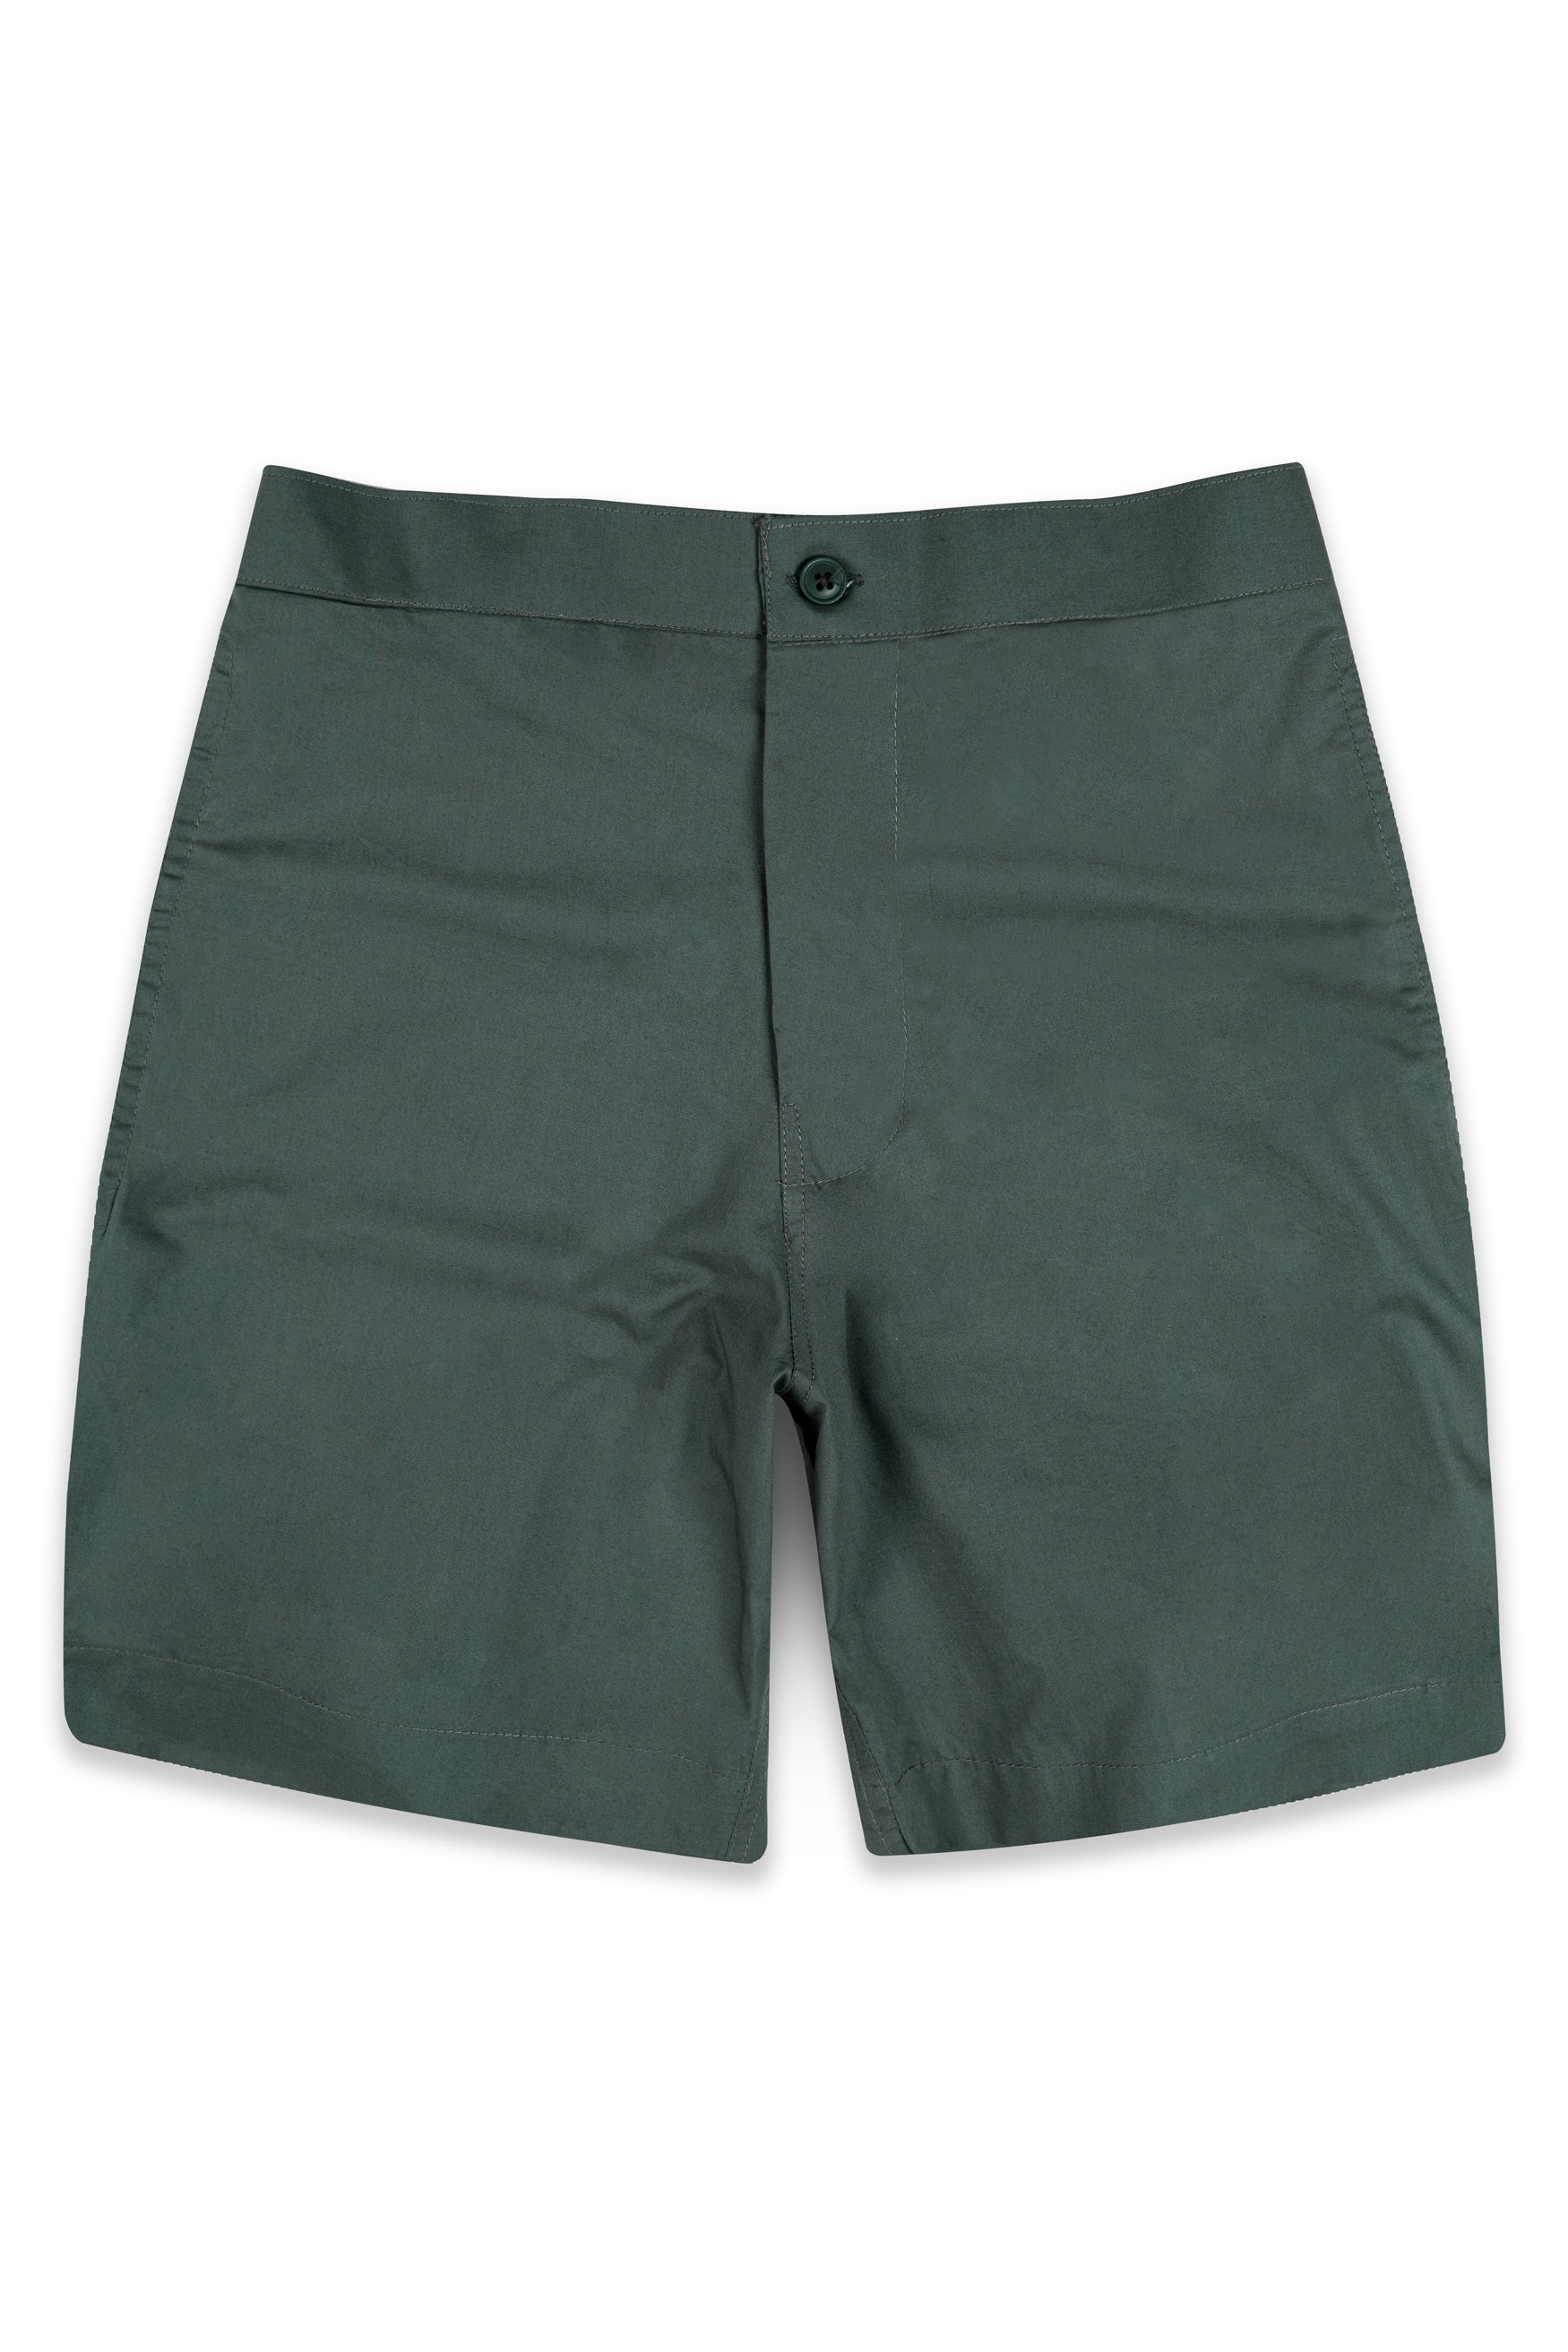 Capecod Green Subtle Sheen Super Soft Premium Cotton Shorts SR399-28, SR399-30, SR399-32, SR399-34, SR399-36, SR399-38, SR399-40, SR399-42, SR399-44